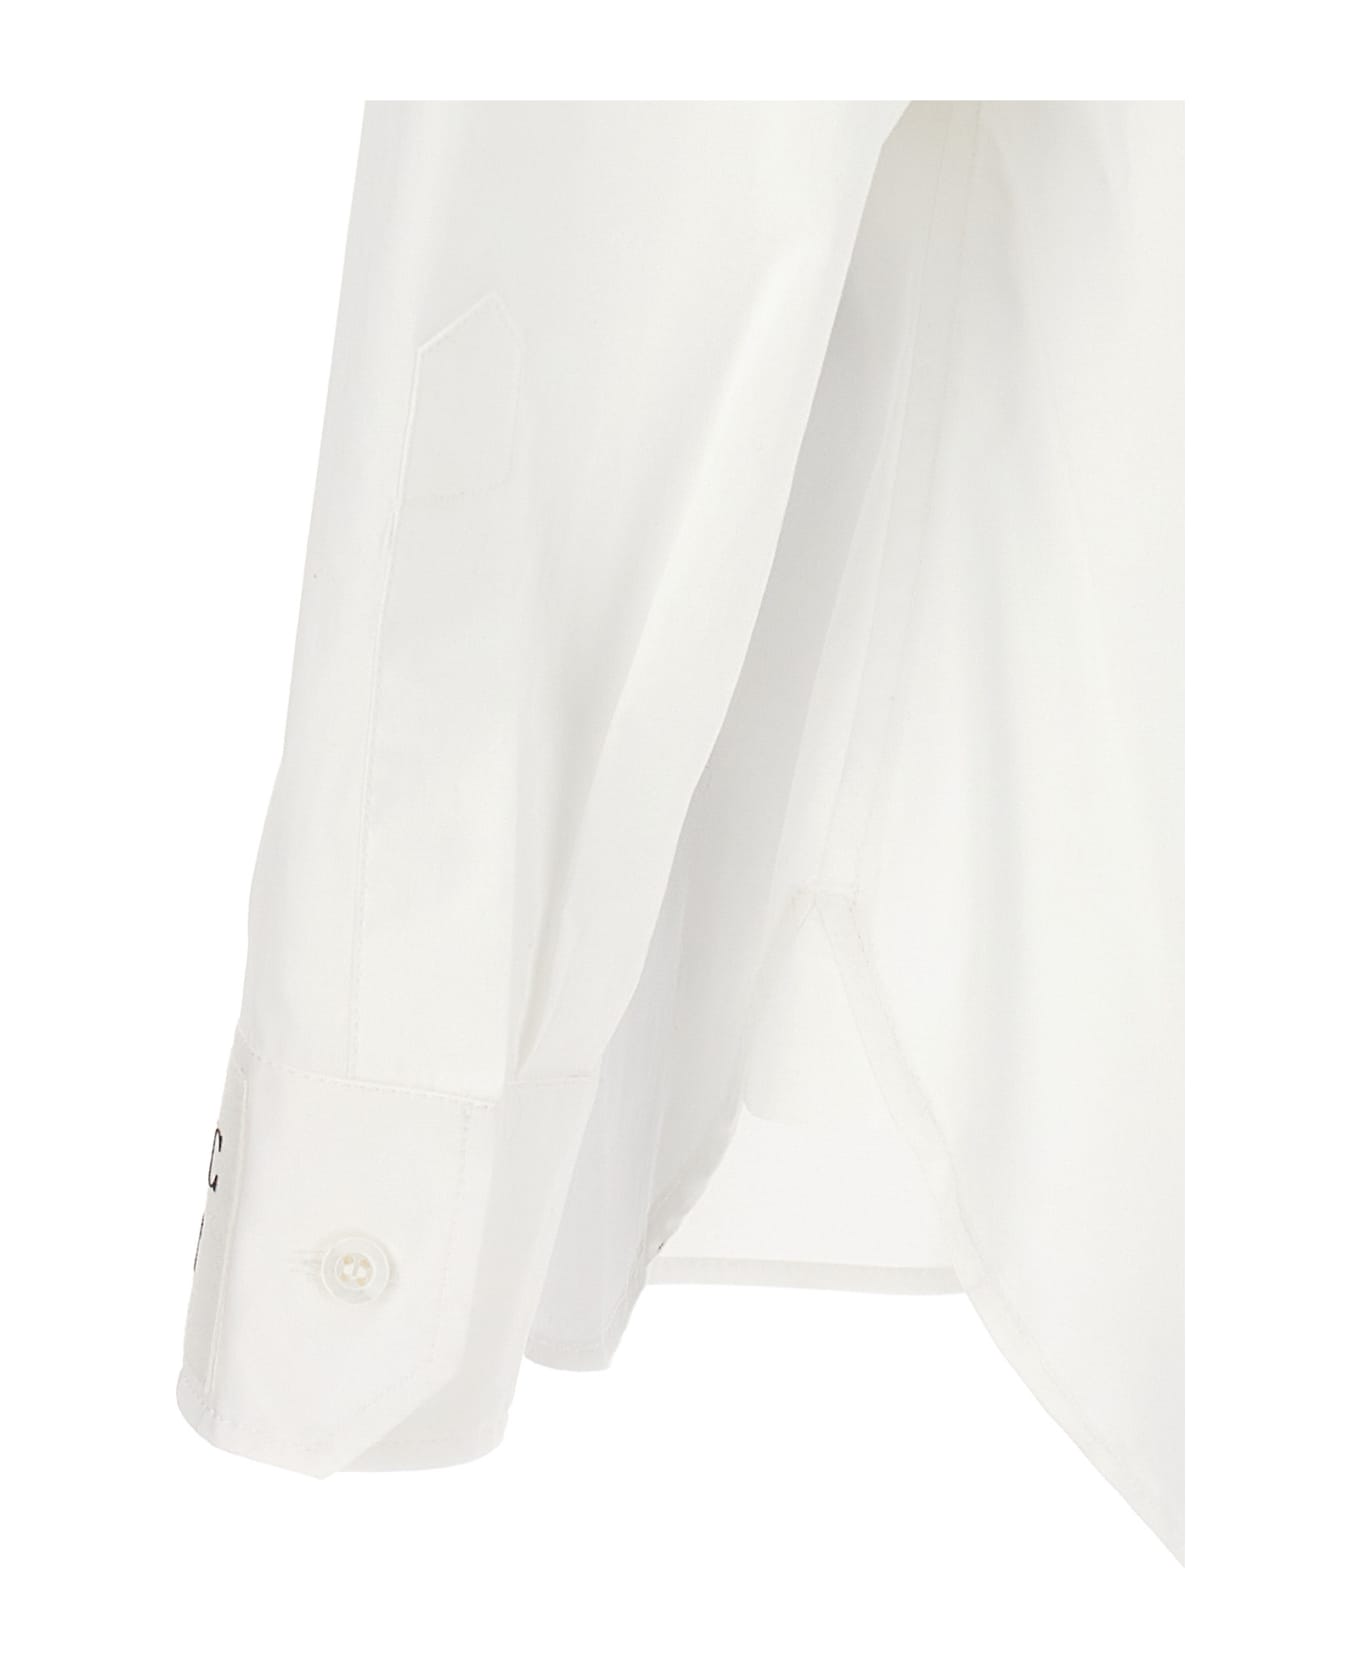 Moschino Poplin Shirt - White